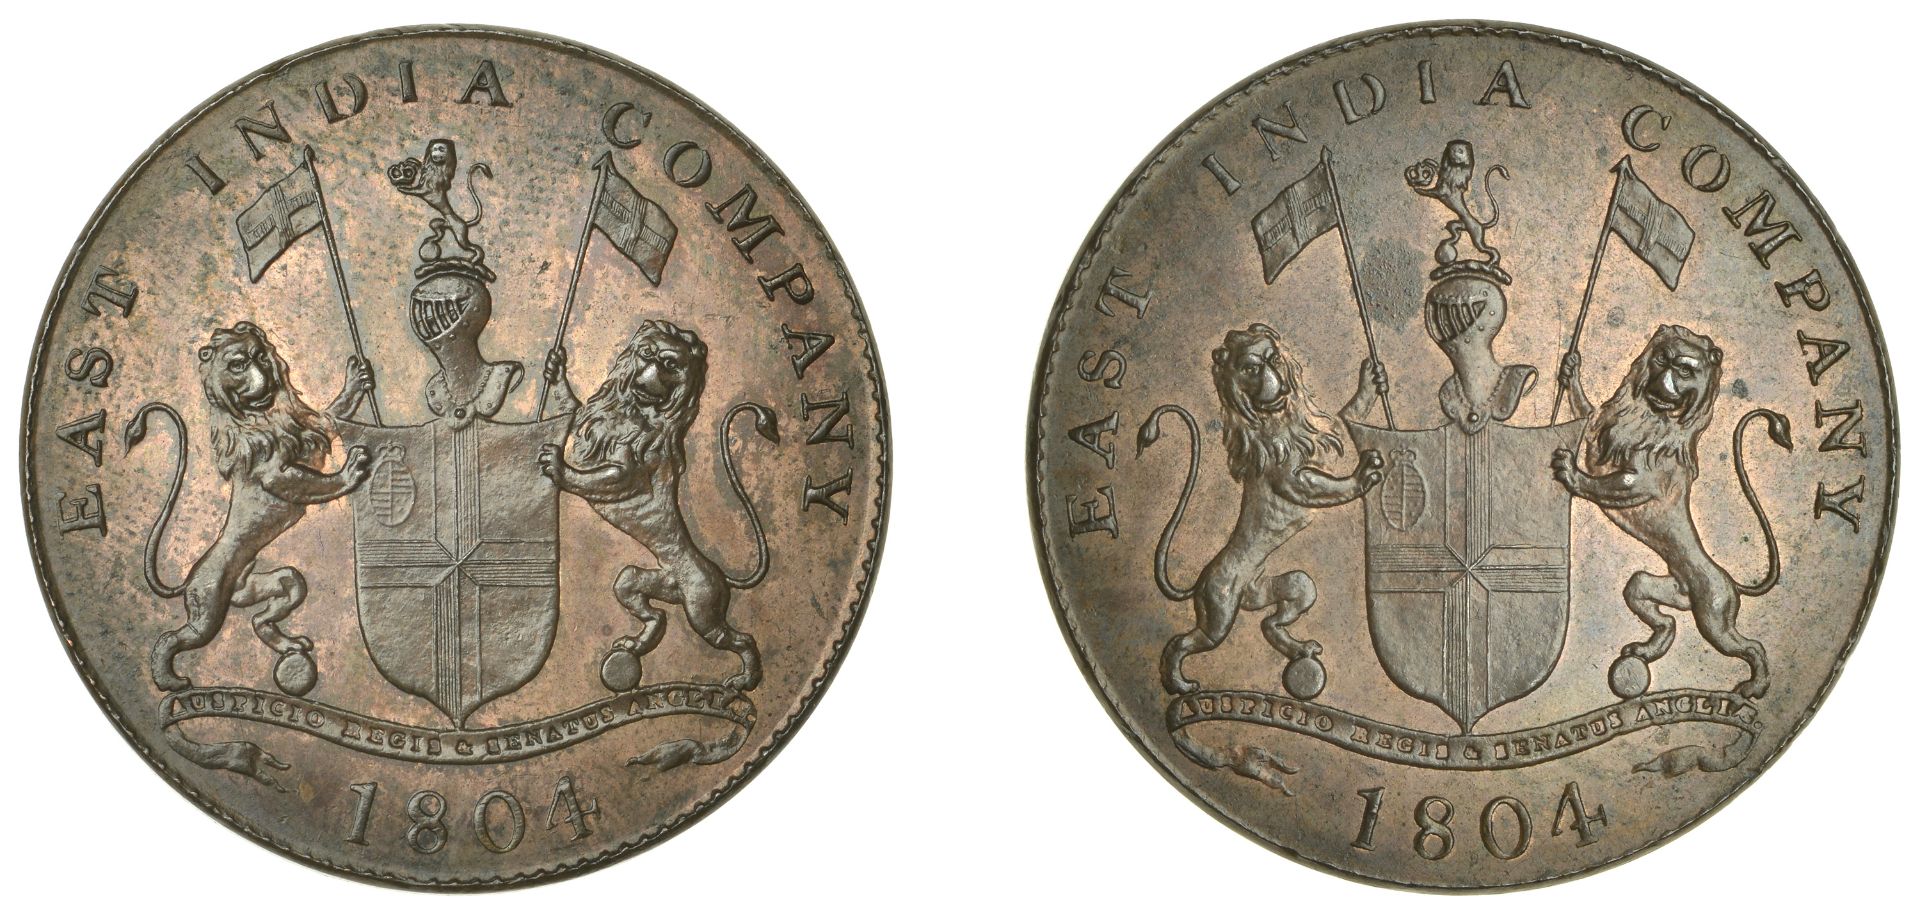 East India Company, Bombay Presidency, European minting, 1804 Soho, copper Double-Pice, 1804...